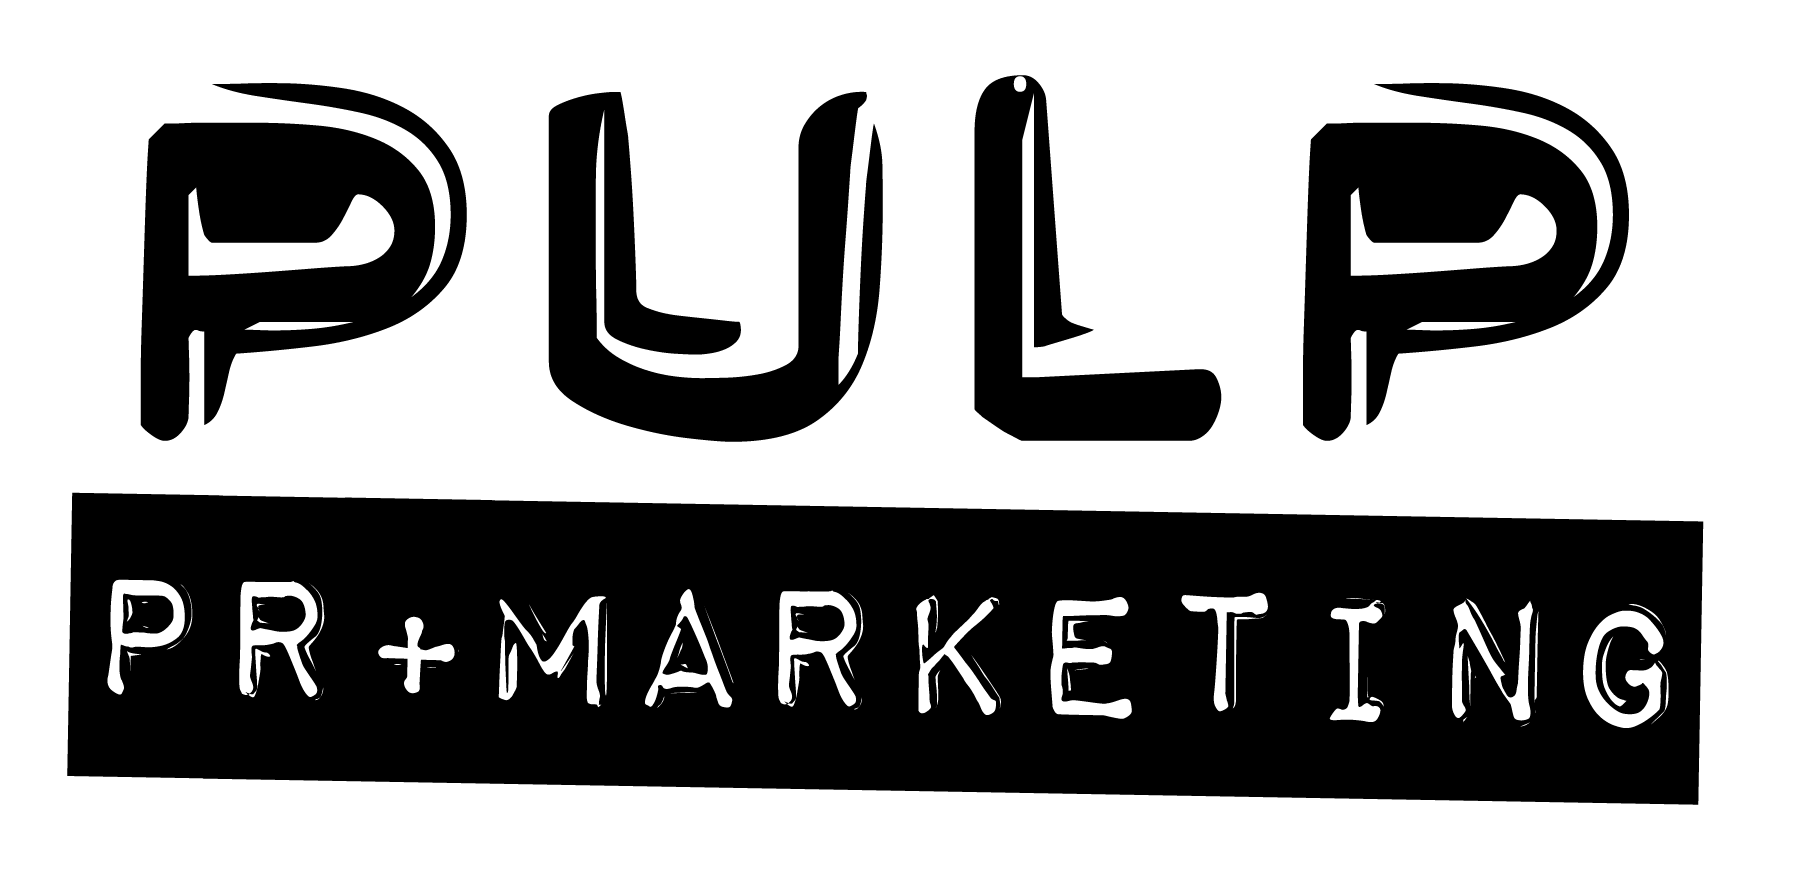 Pulp-Logo